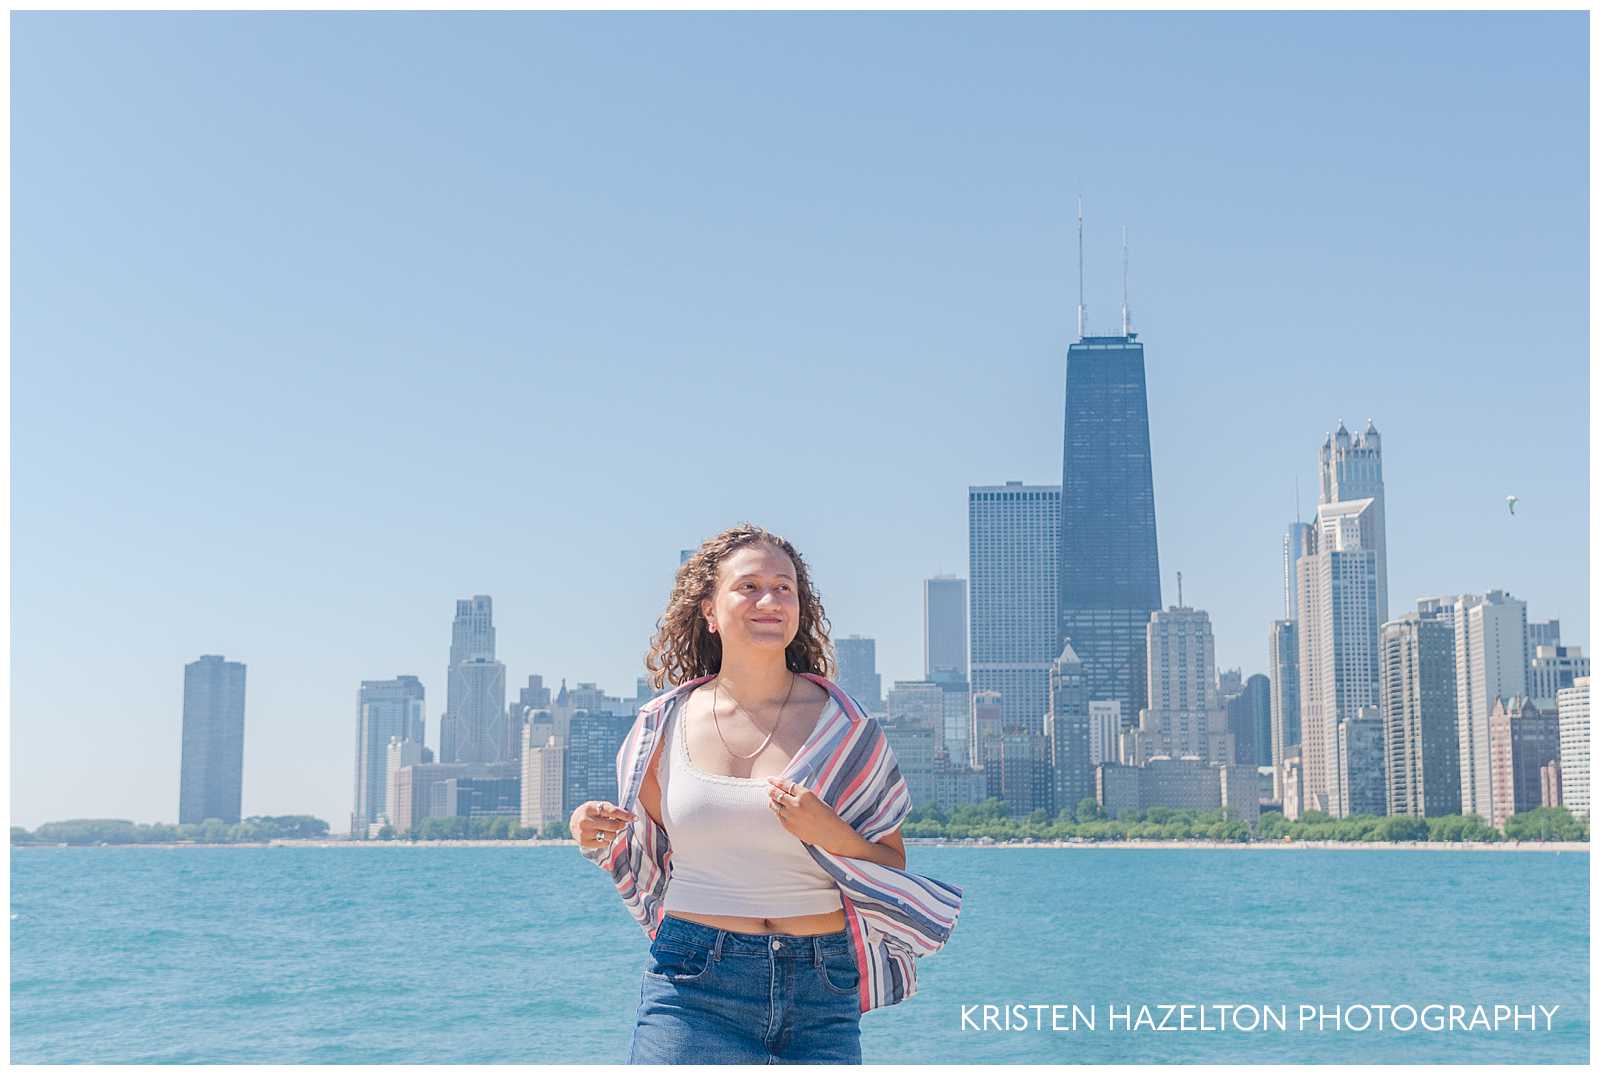 High school senior girl standing in front of the Chicago city skyline